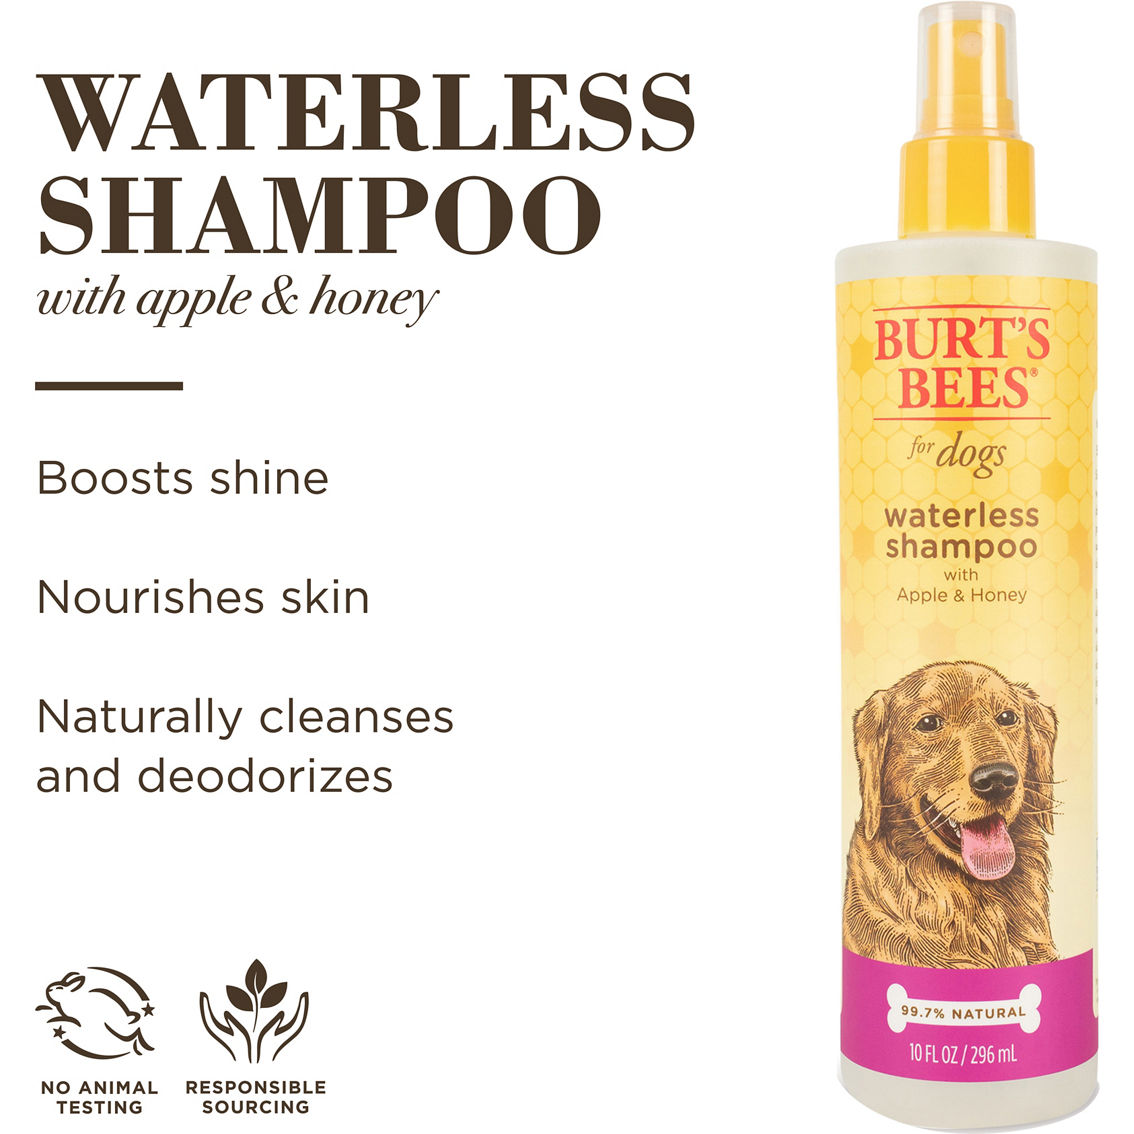 Burts Bees Waterless Dog Shampoo Spray with Apple and Honey 10 oz. - Image 4 of 7